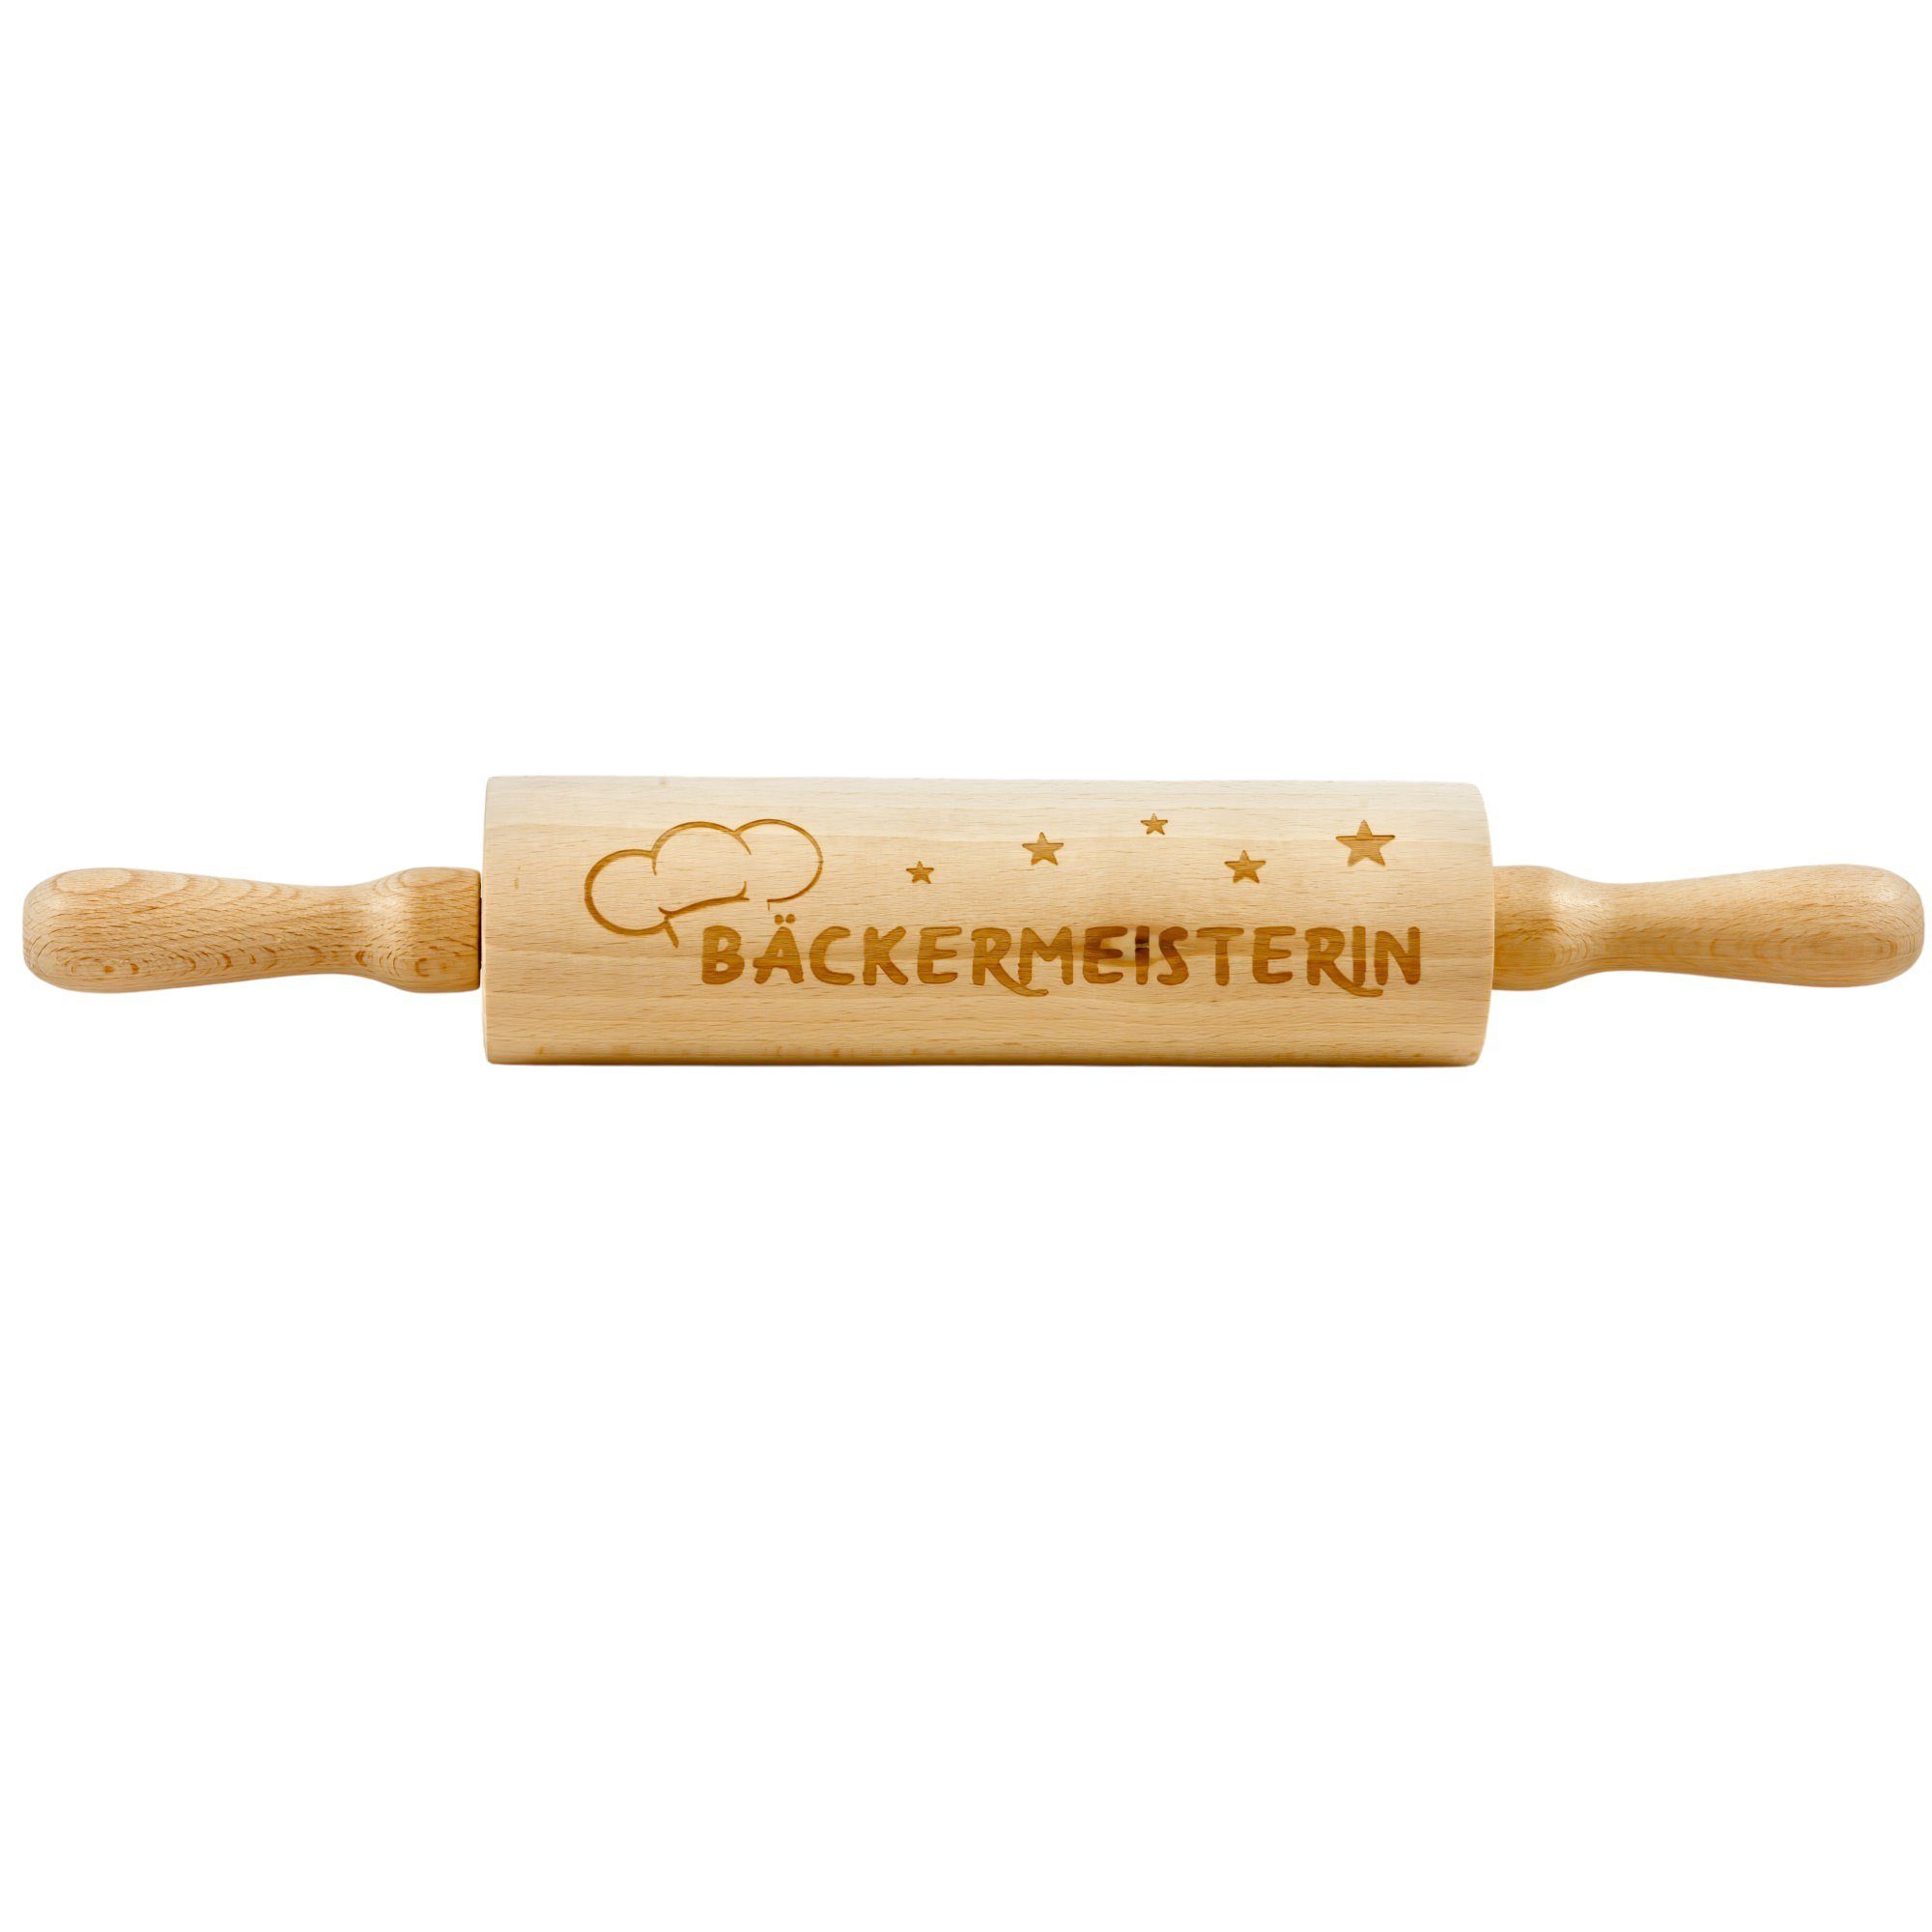 Spruchreif® Nudelholz Nudelholz mit Gravur, Teigroller aus Holz, Teigausroller Backzubehör, Nudelholz mit Prägung, tolle Geschenkidee "Bäckermeisterin"